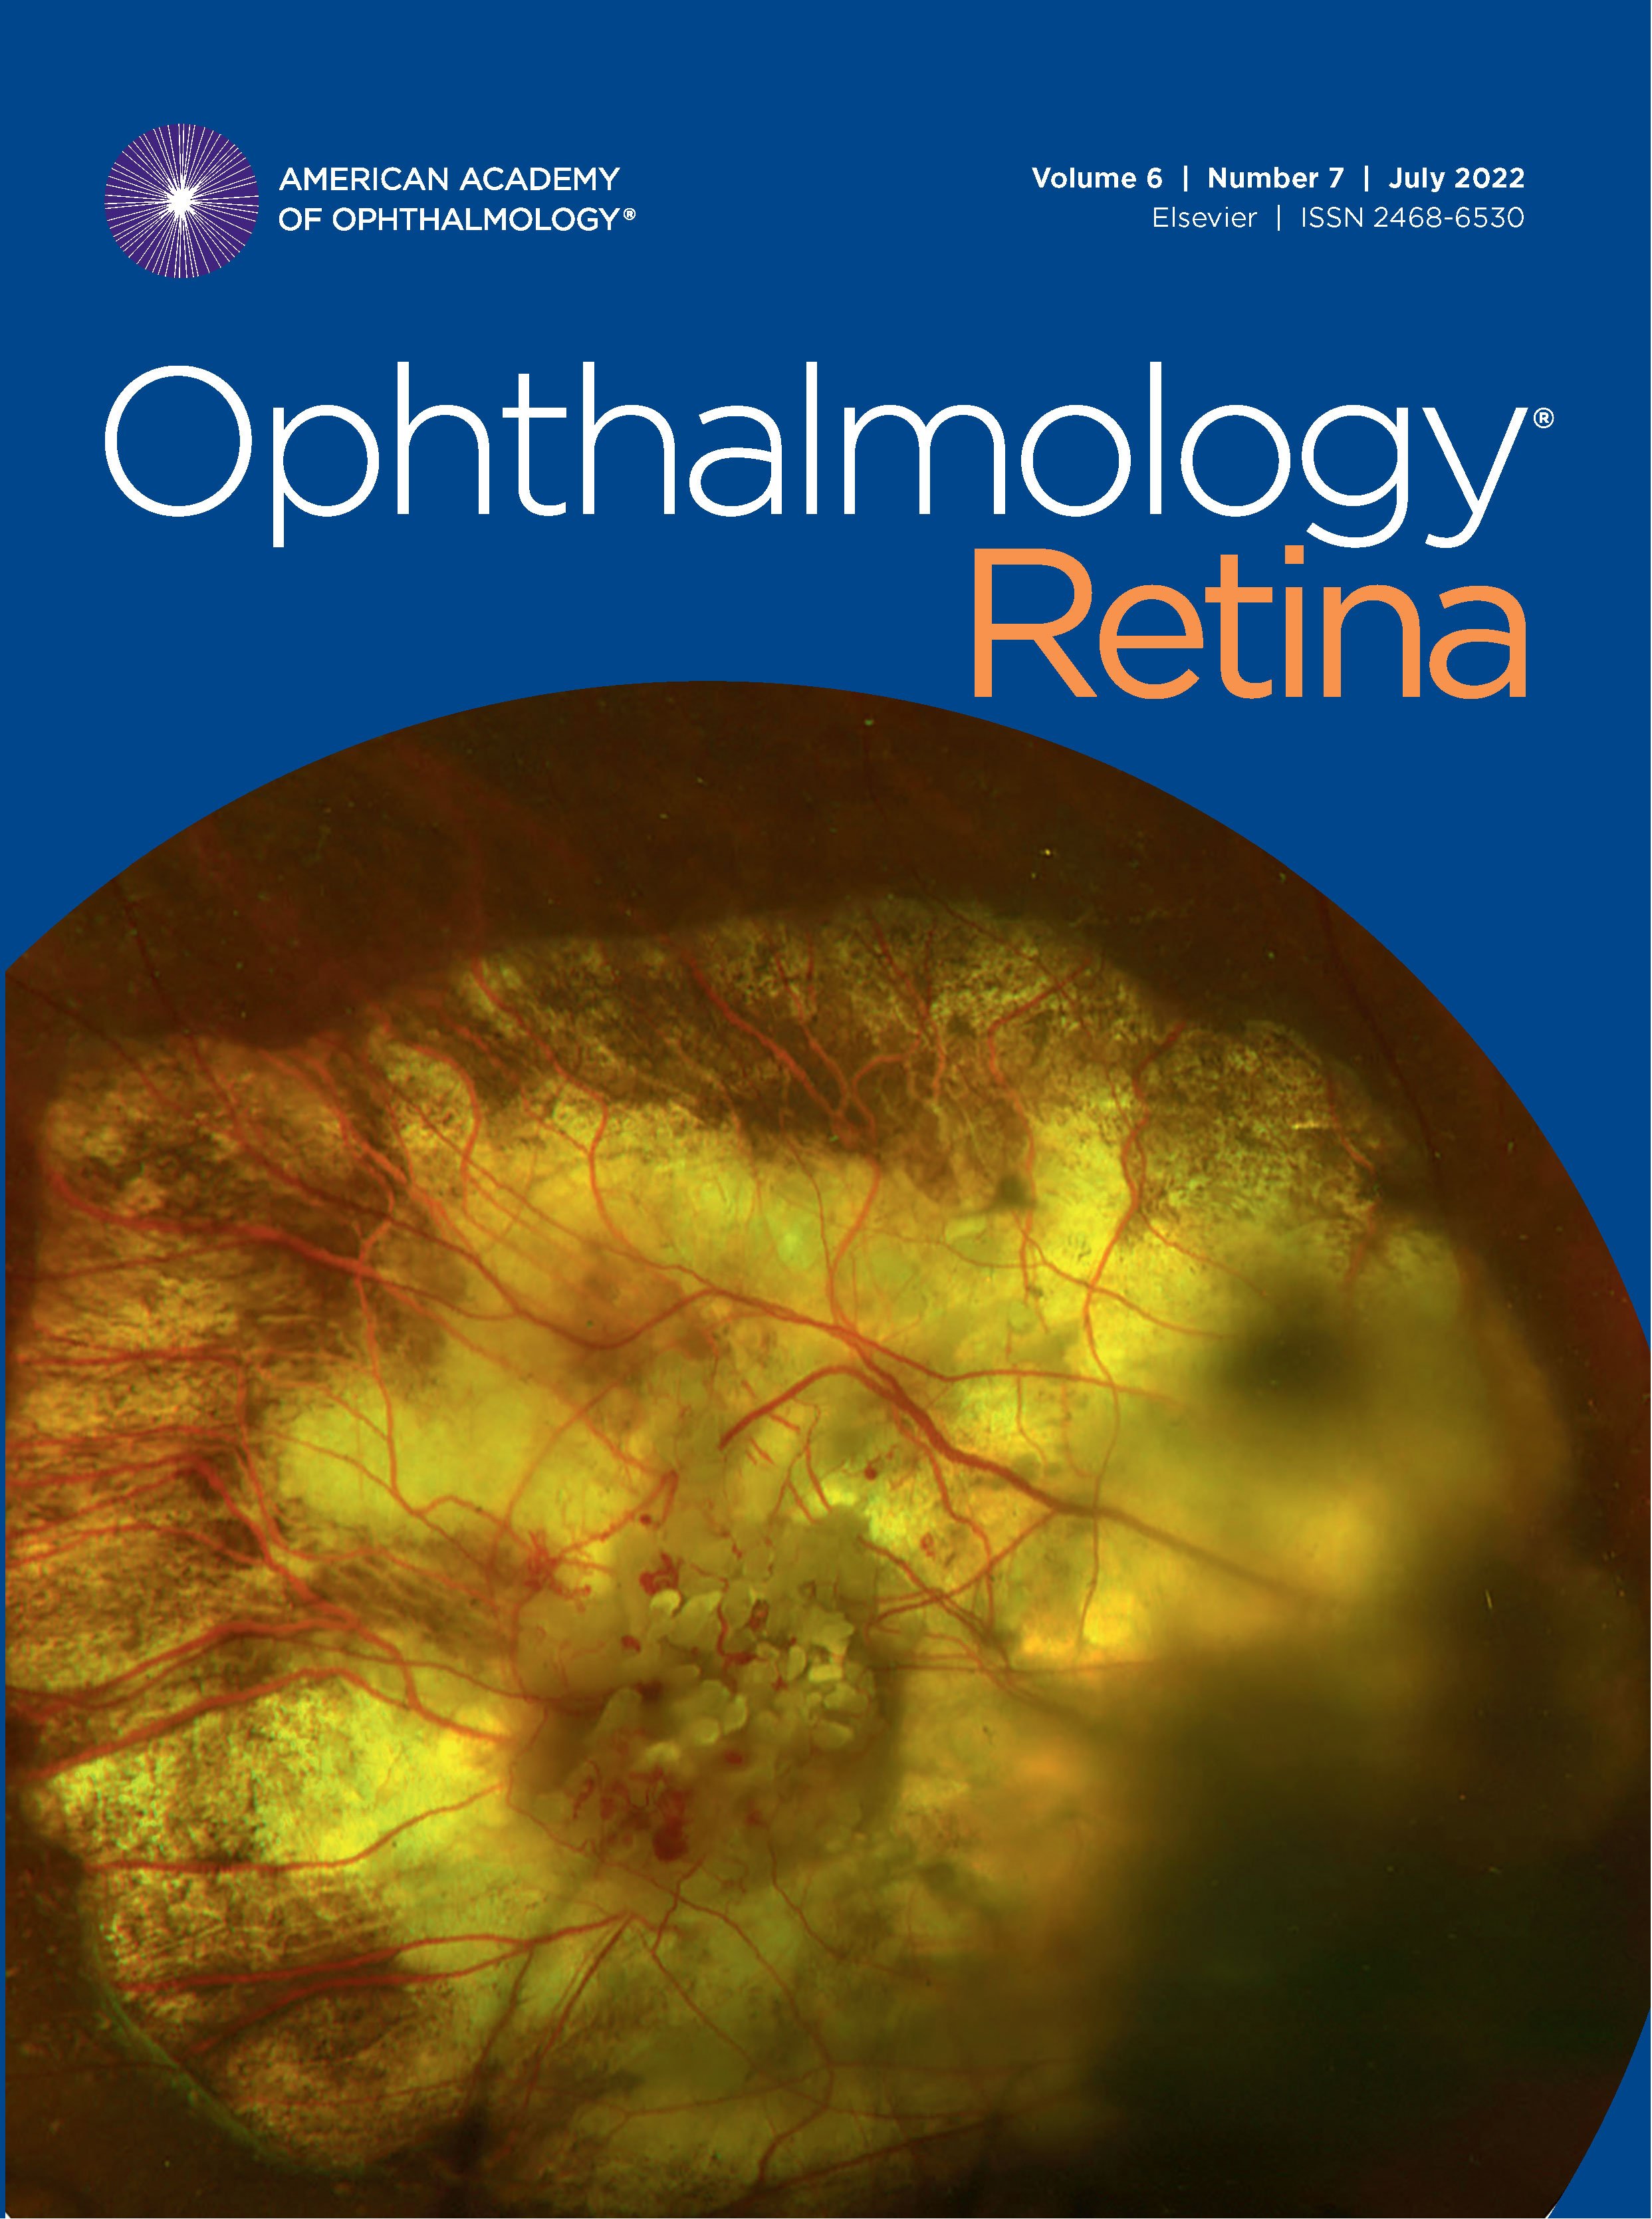 Ophthalmology Retina July 2022, Volume 6, Number 7 image